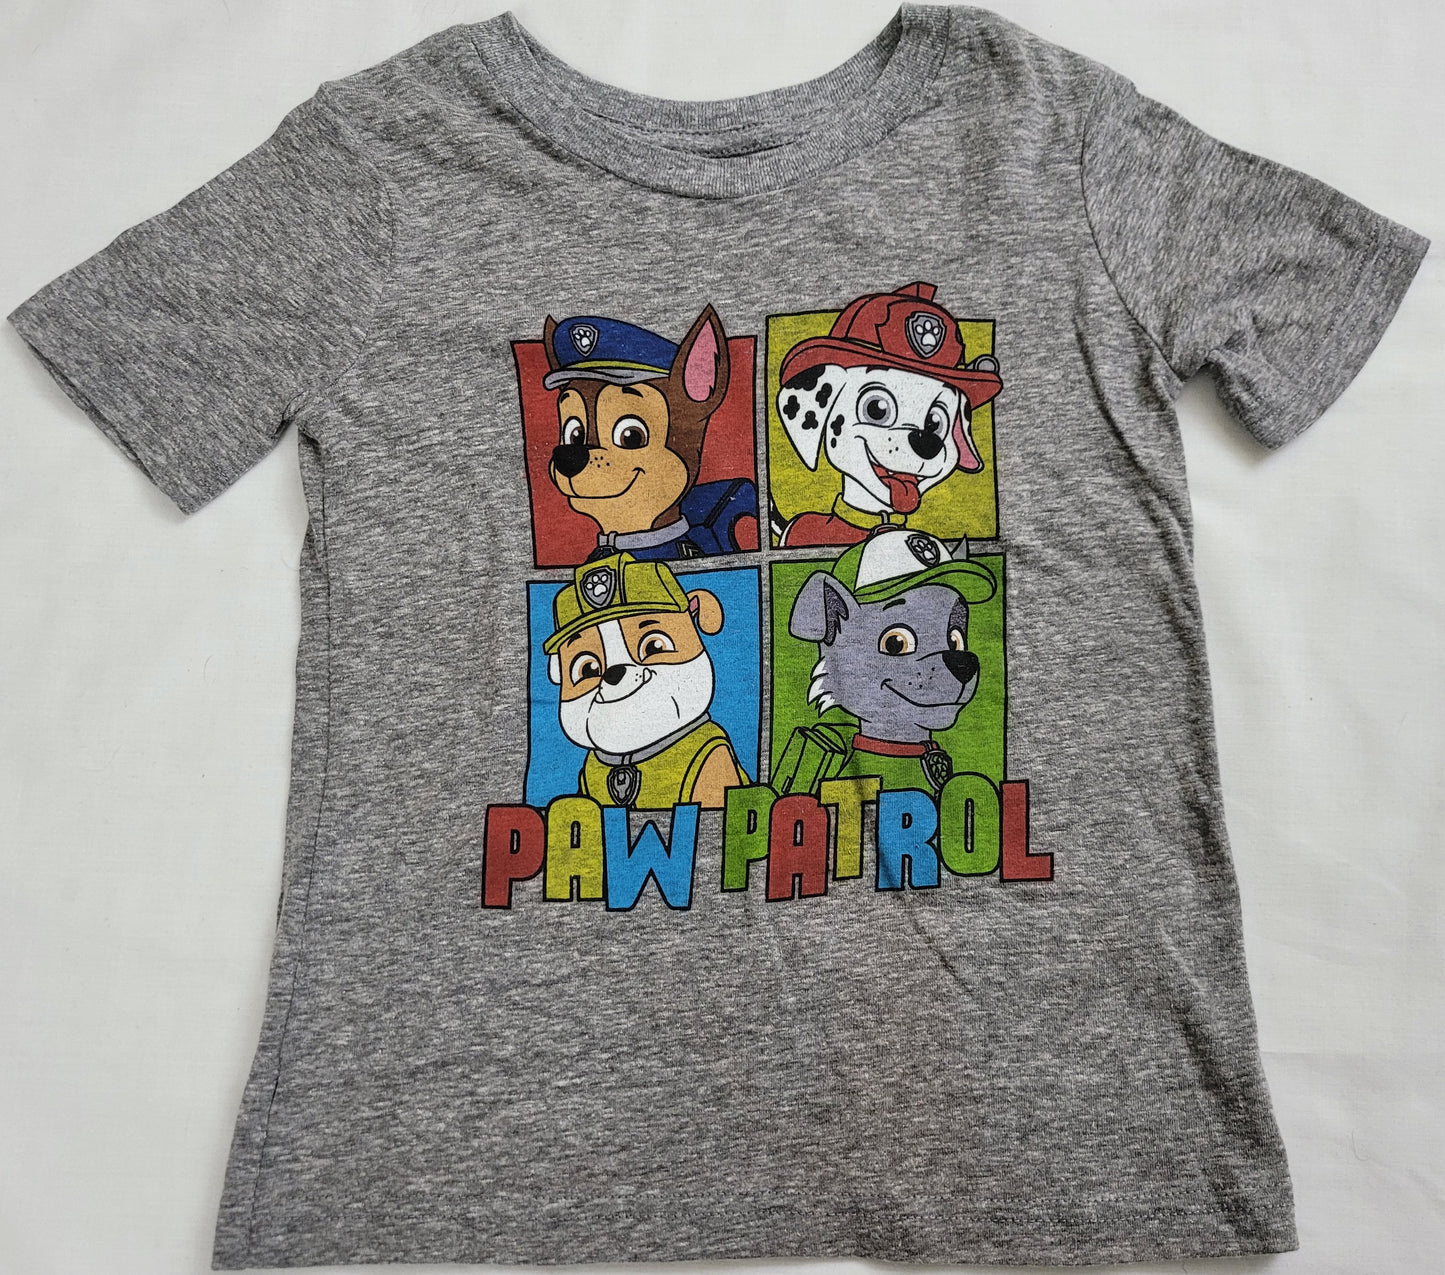 Team Paw Patrol Boys T-Shirt Nick Jr (Grey)